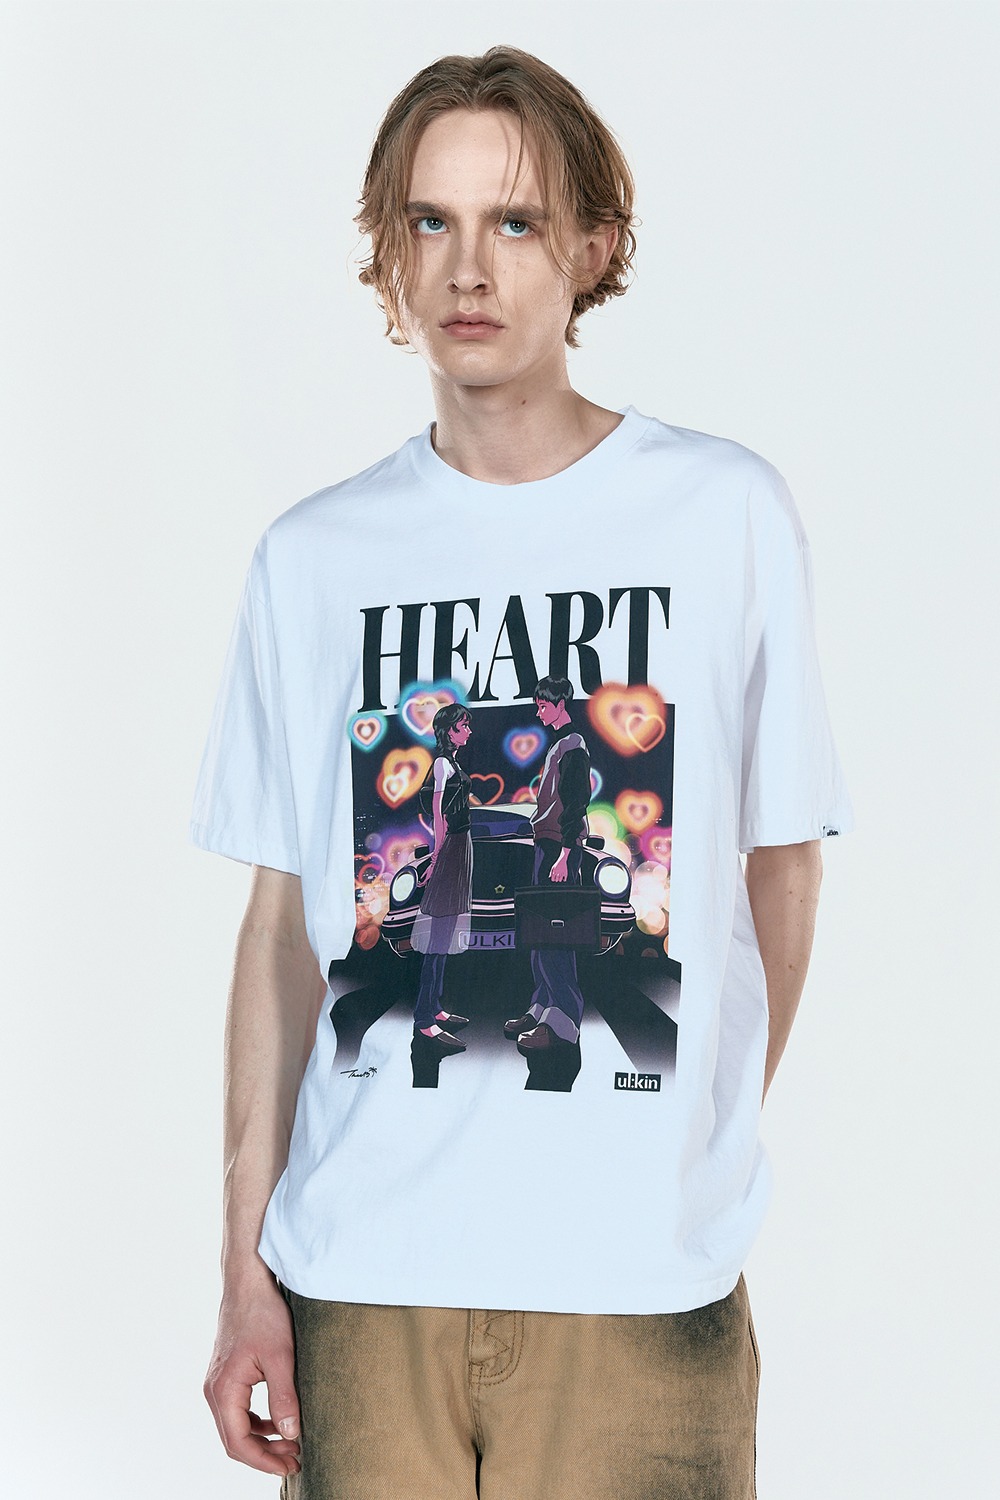 ULKIN X TREE 13 Artist T-shirt_Heart_White